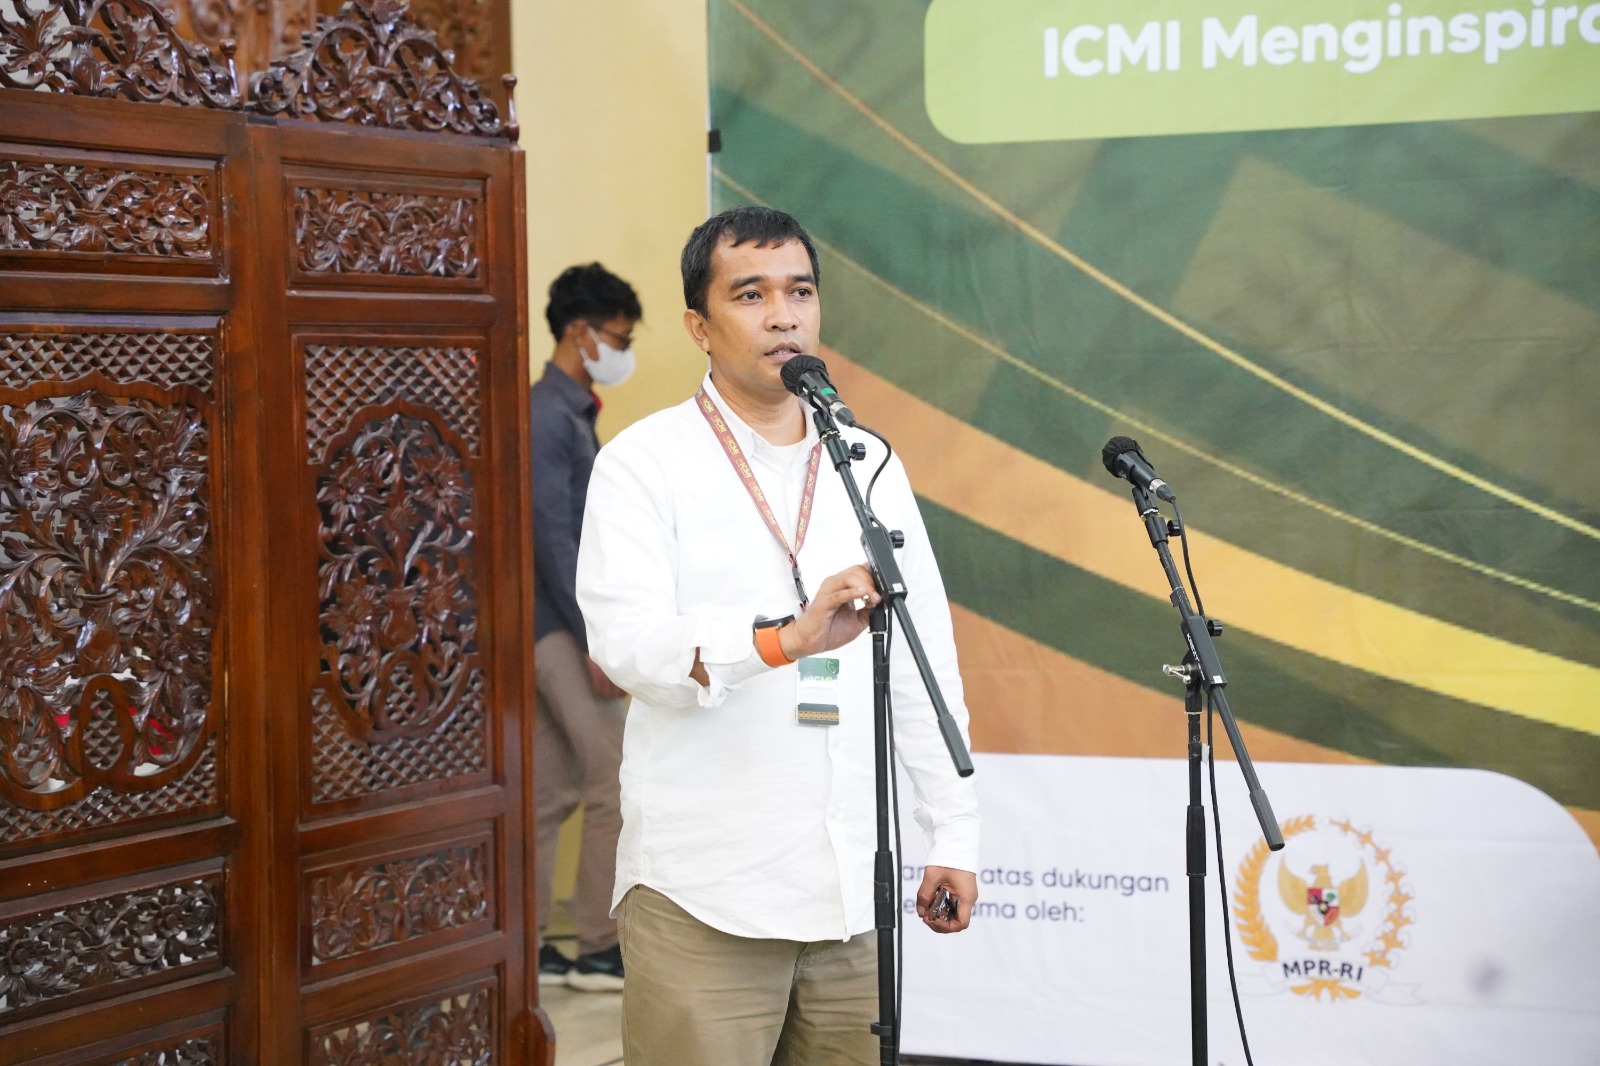 Indonesian Muslim organization